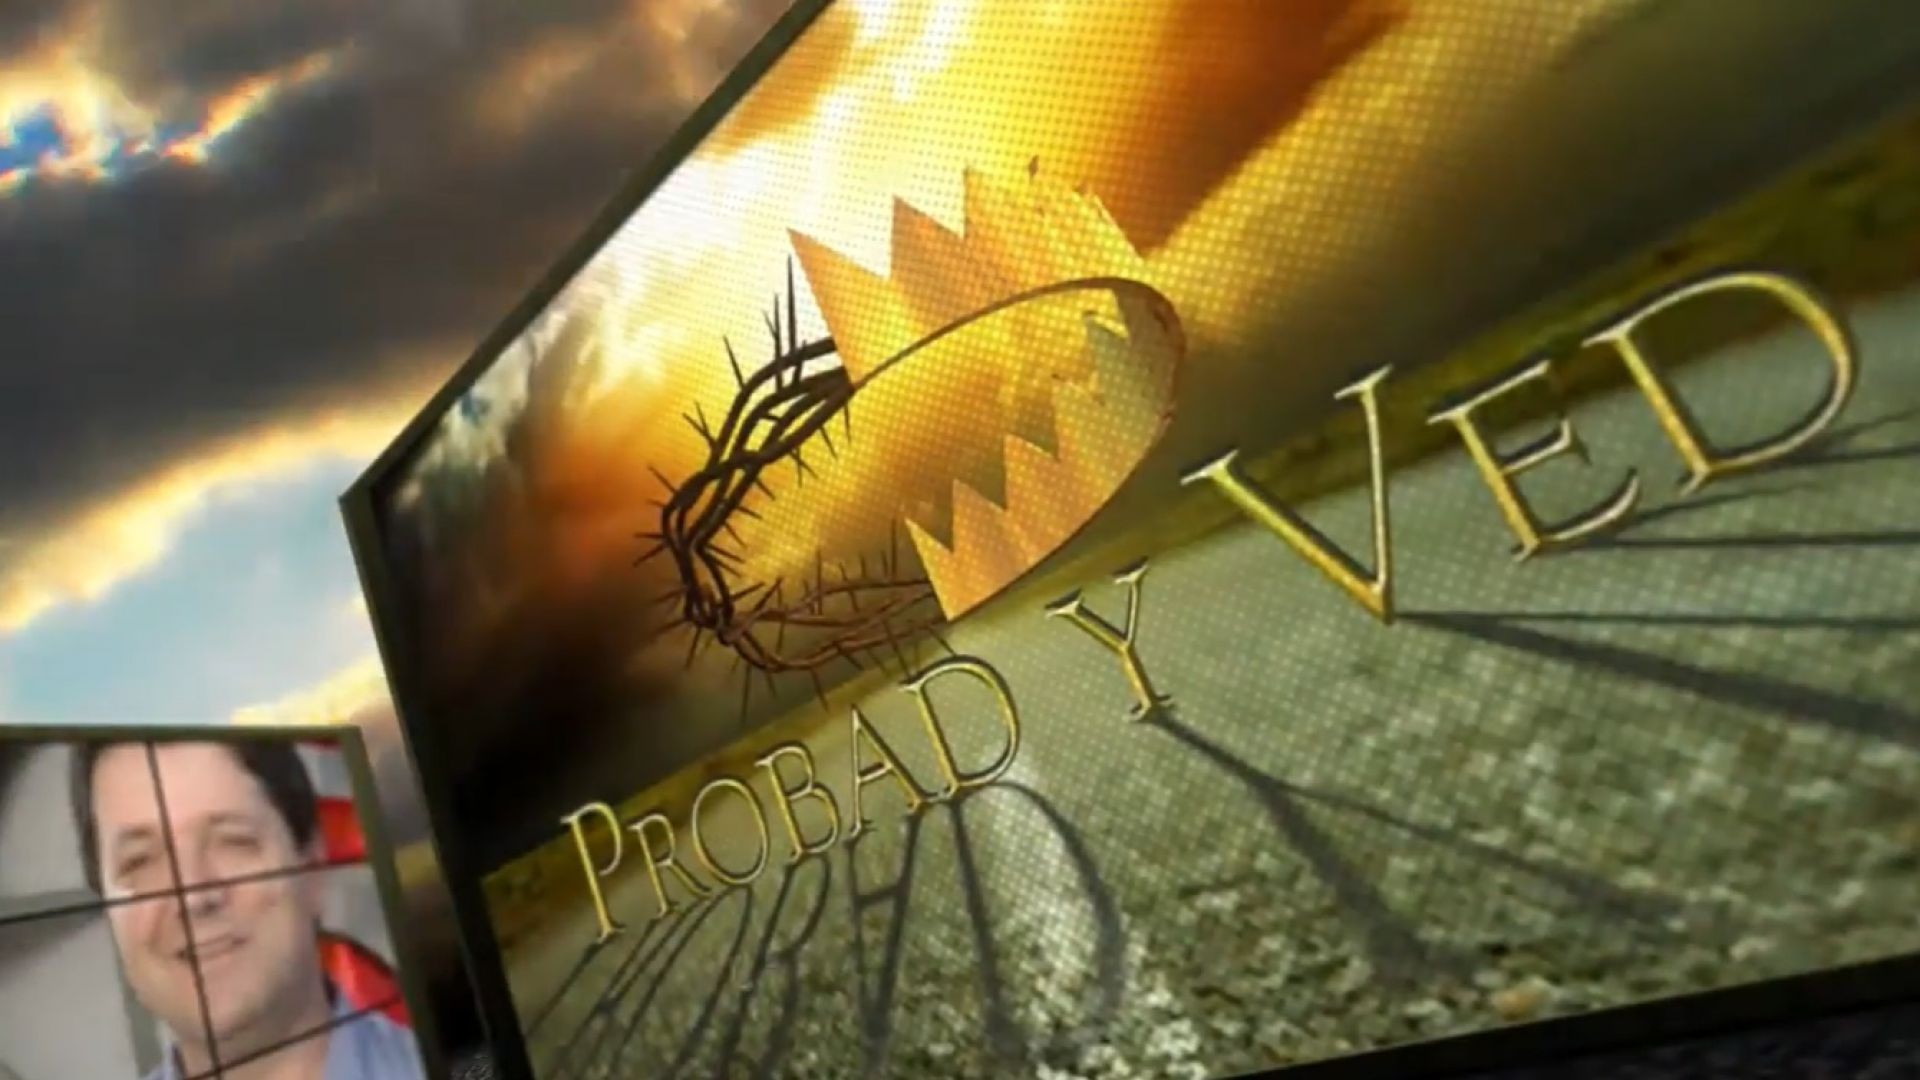 Probad y Ved 2012 - Milagros del siglo XXI